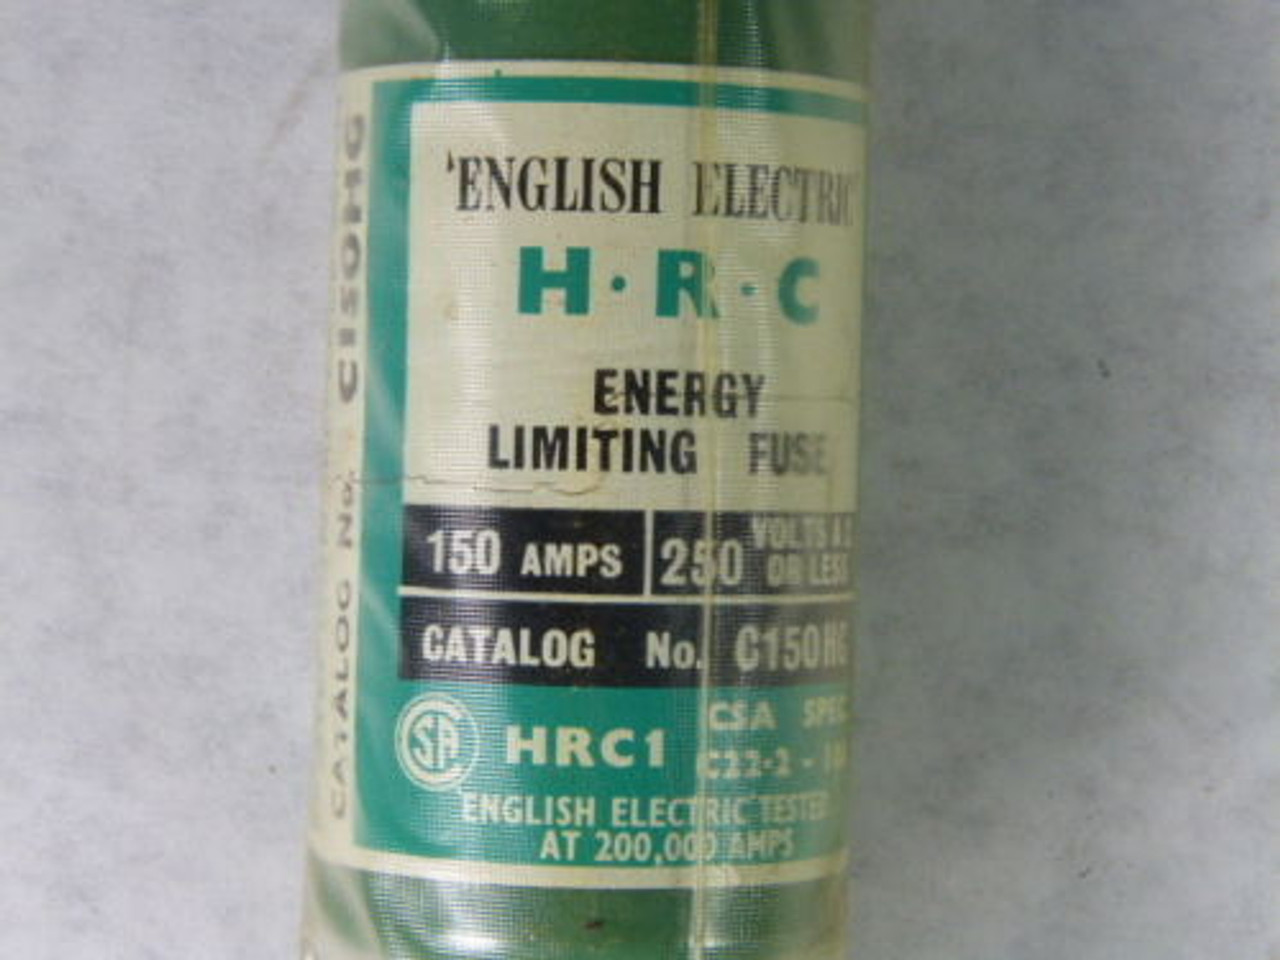 English Electric C150HG Energy Limiting Fuse 150A 250V *DMG Box* ! NEW !